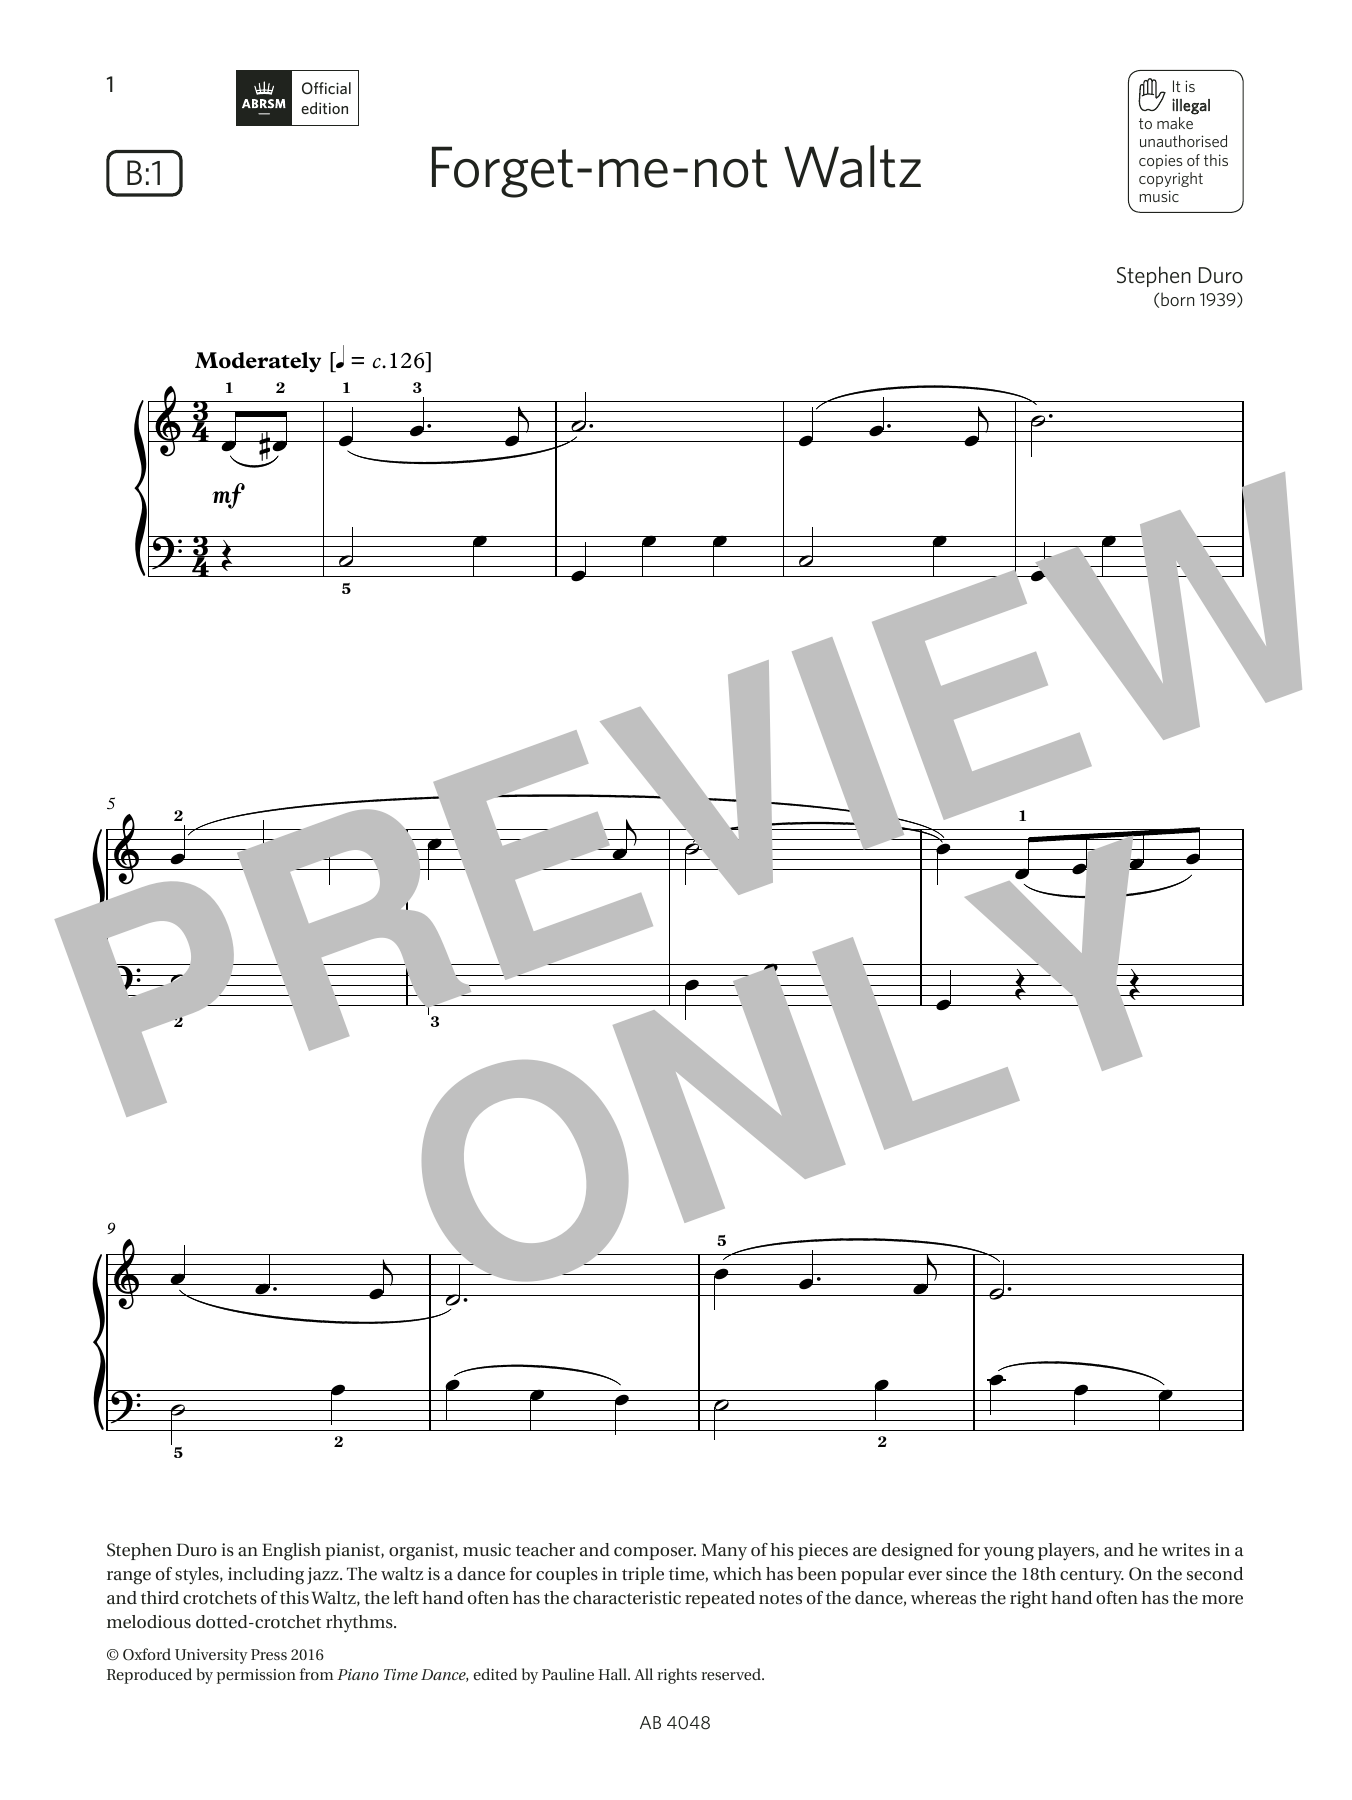 Download Stephen Duro Forget-me-not Waltz (Grade 2, list B1, Sheet Music